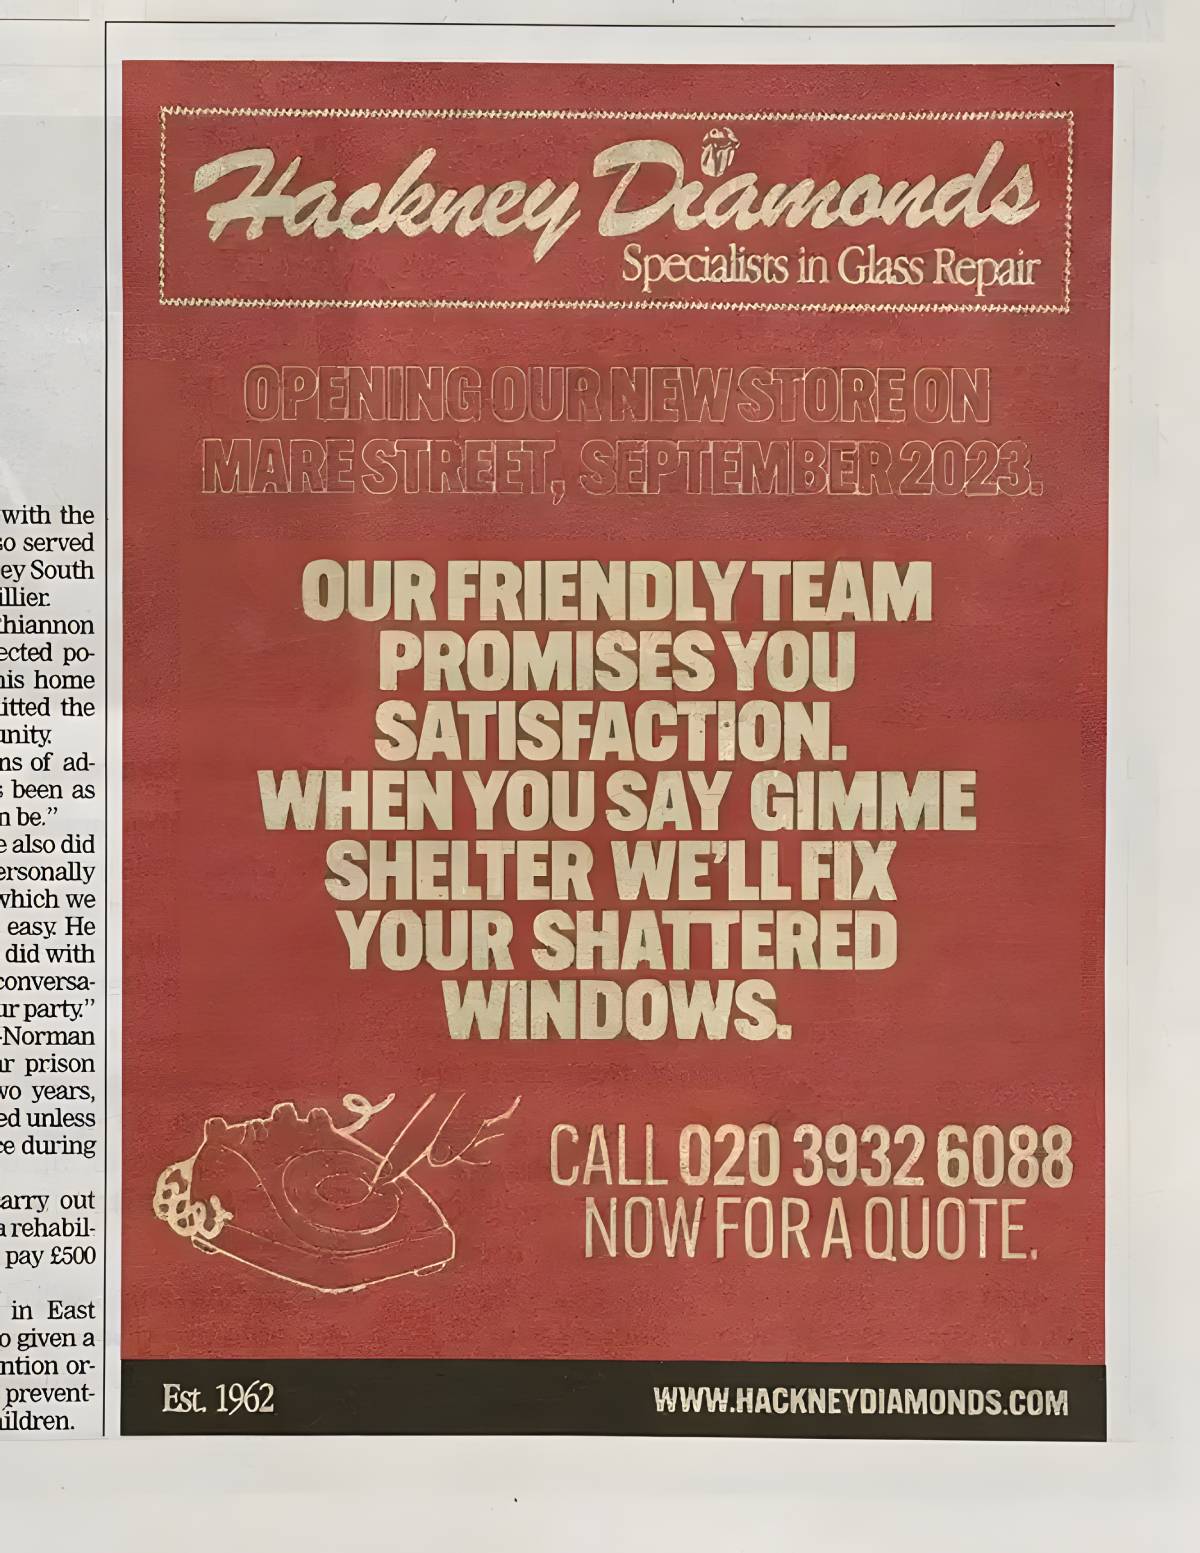 Campagne publicitaire de Hackney Diamonds